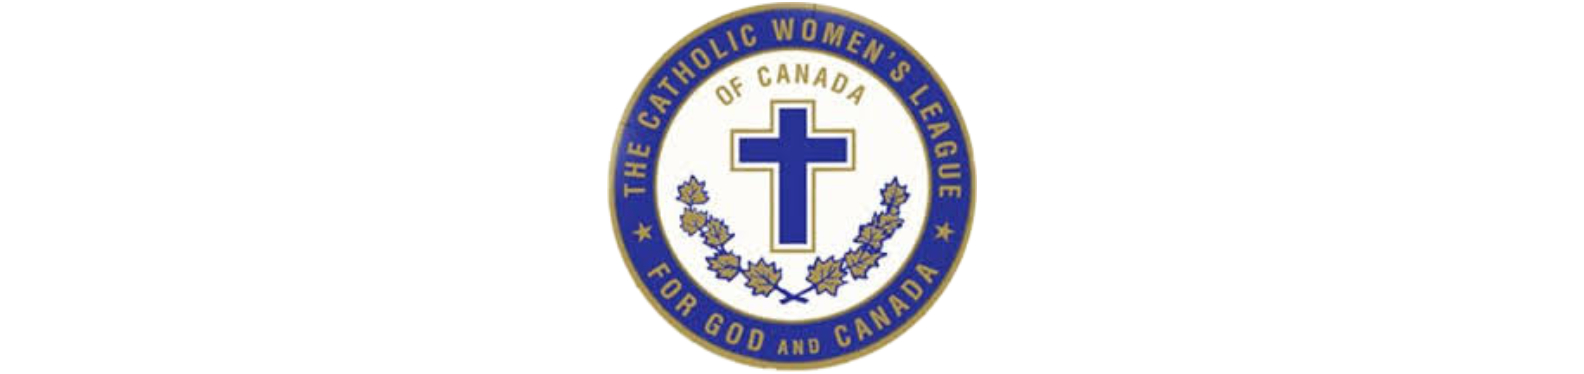 Round logo for the Catholic Women's League of Canada